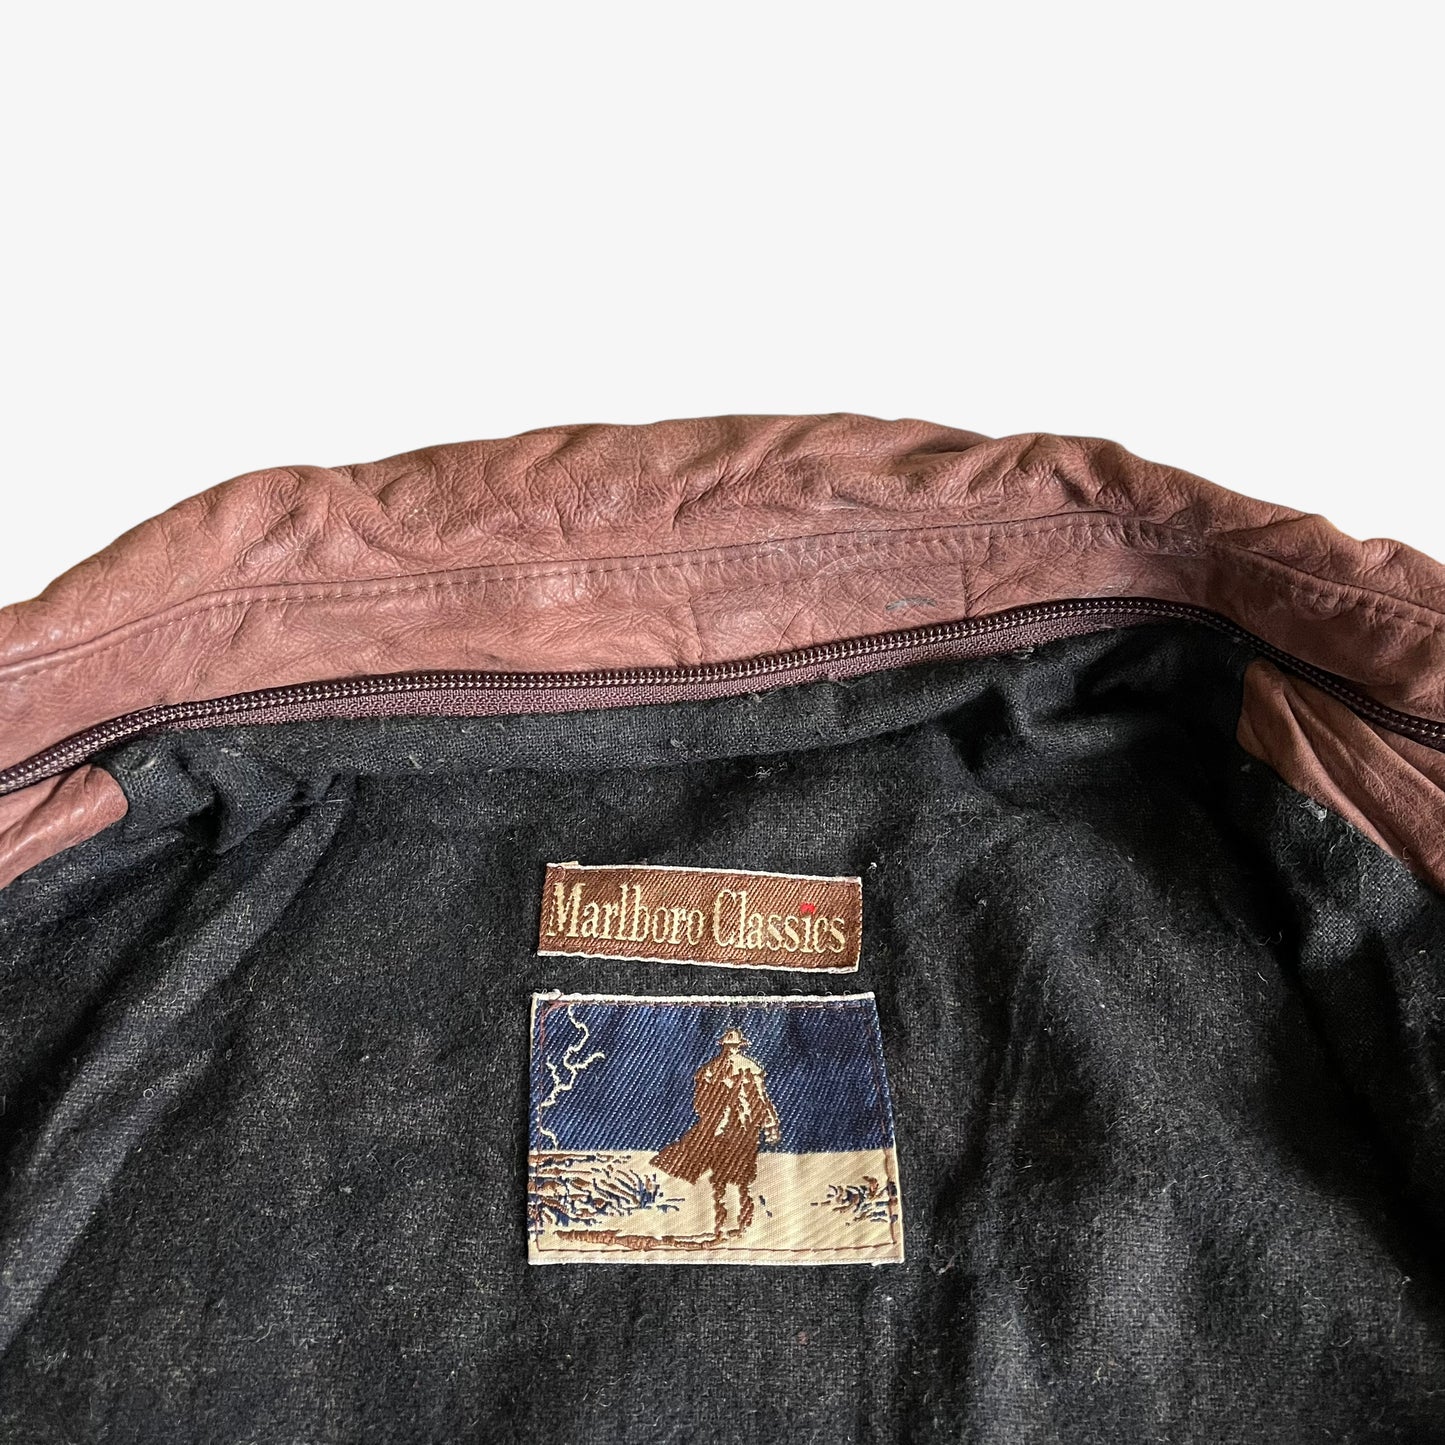 Vintage 1980s Marlboro Classics Red Leather Jacket Label - Casspios Dream